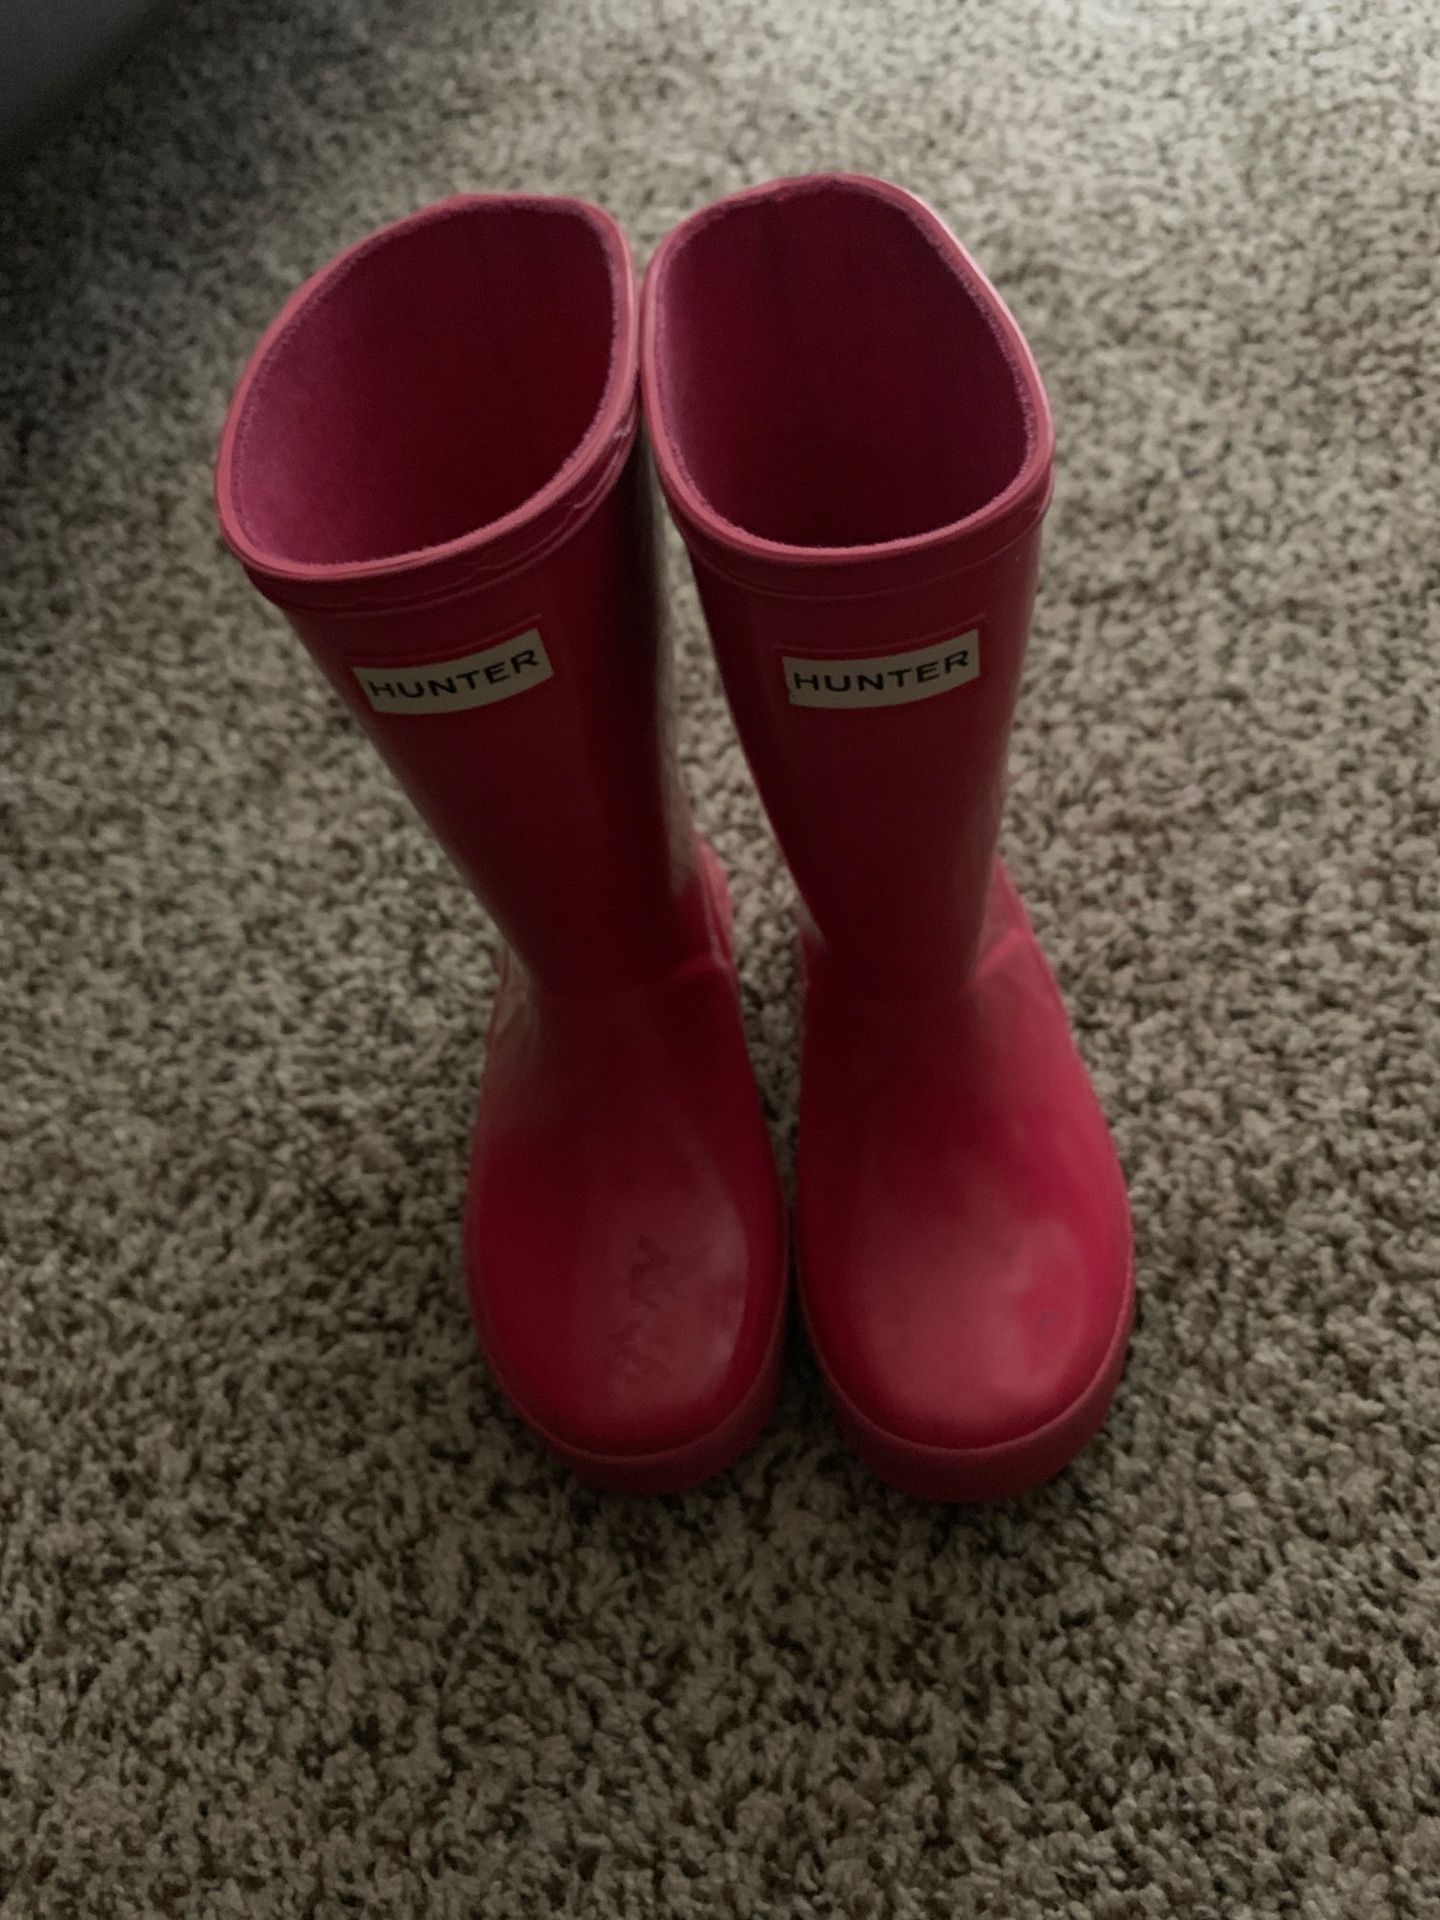 Kids hunter rain boots hot pink